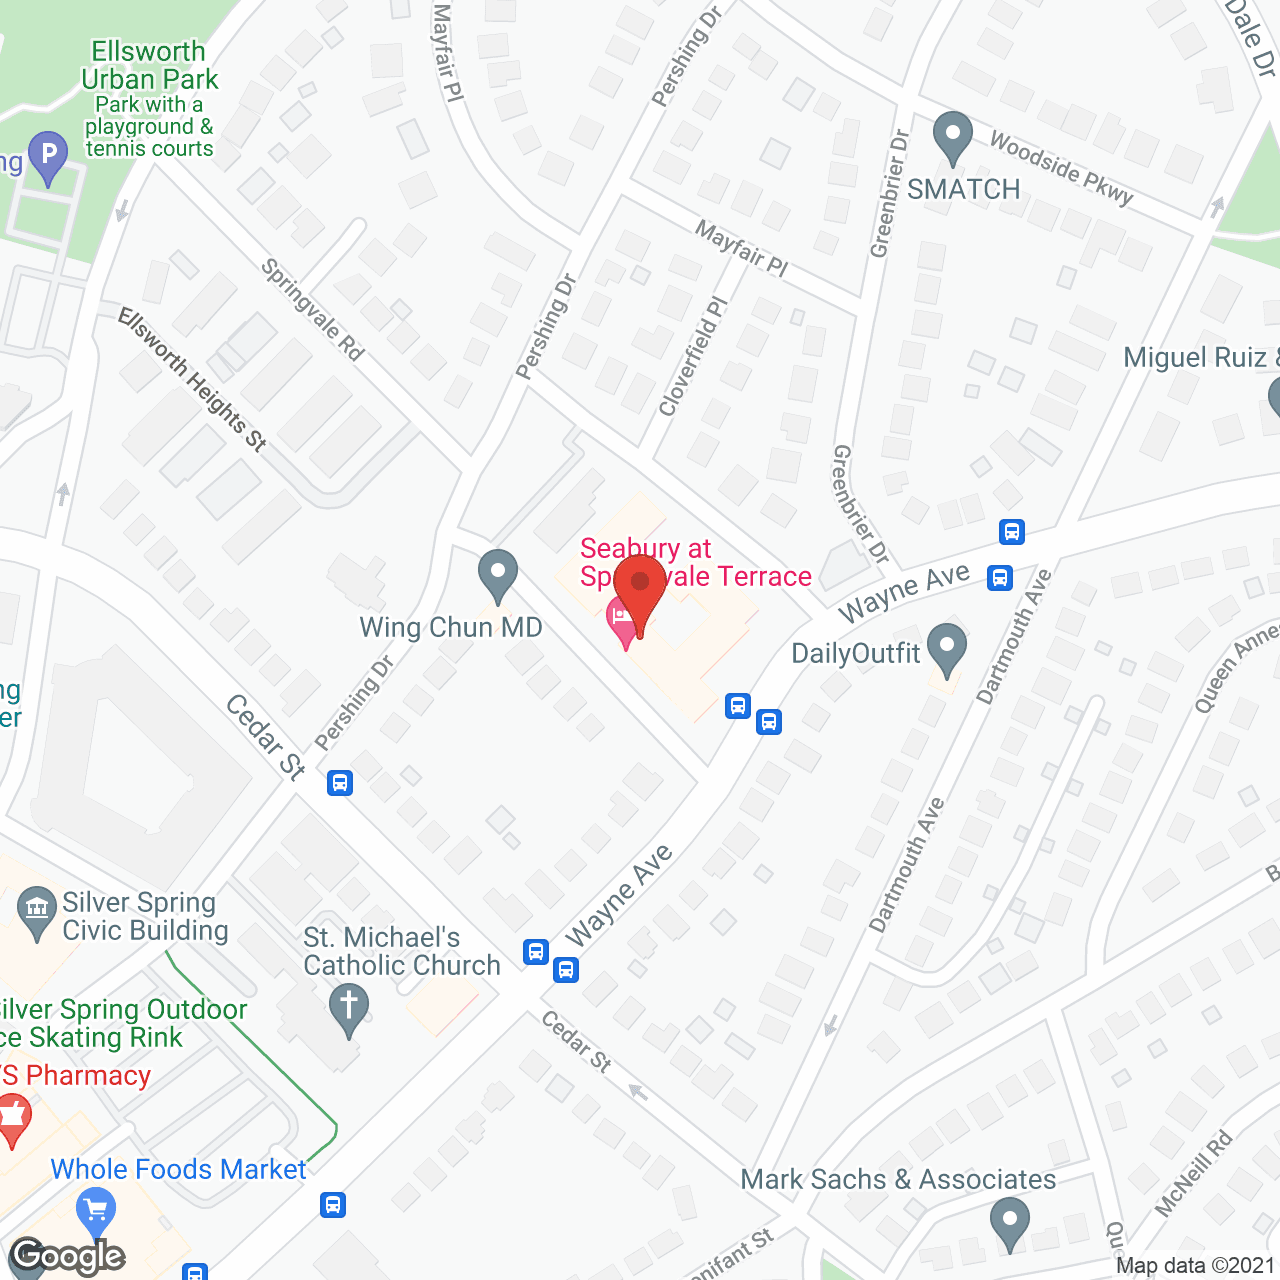 Seabury at Springvale Terrace in google map